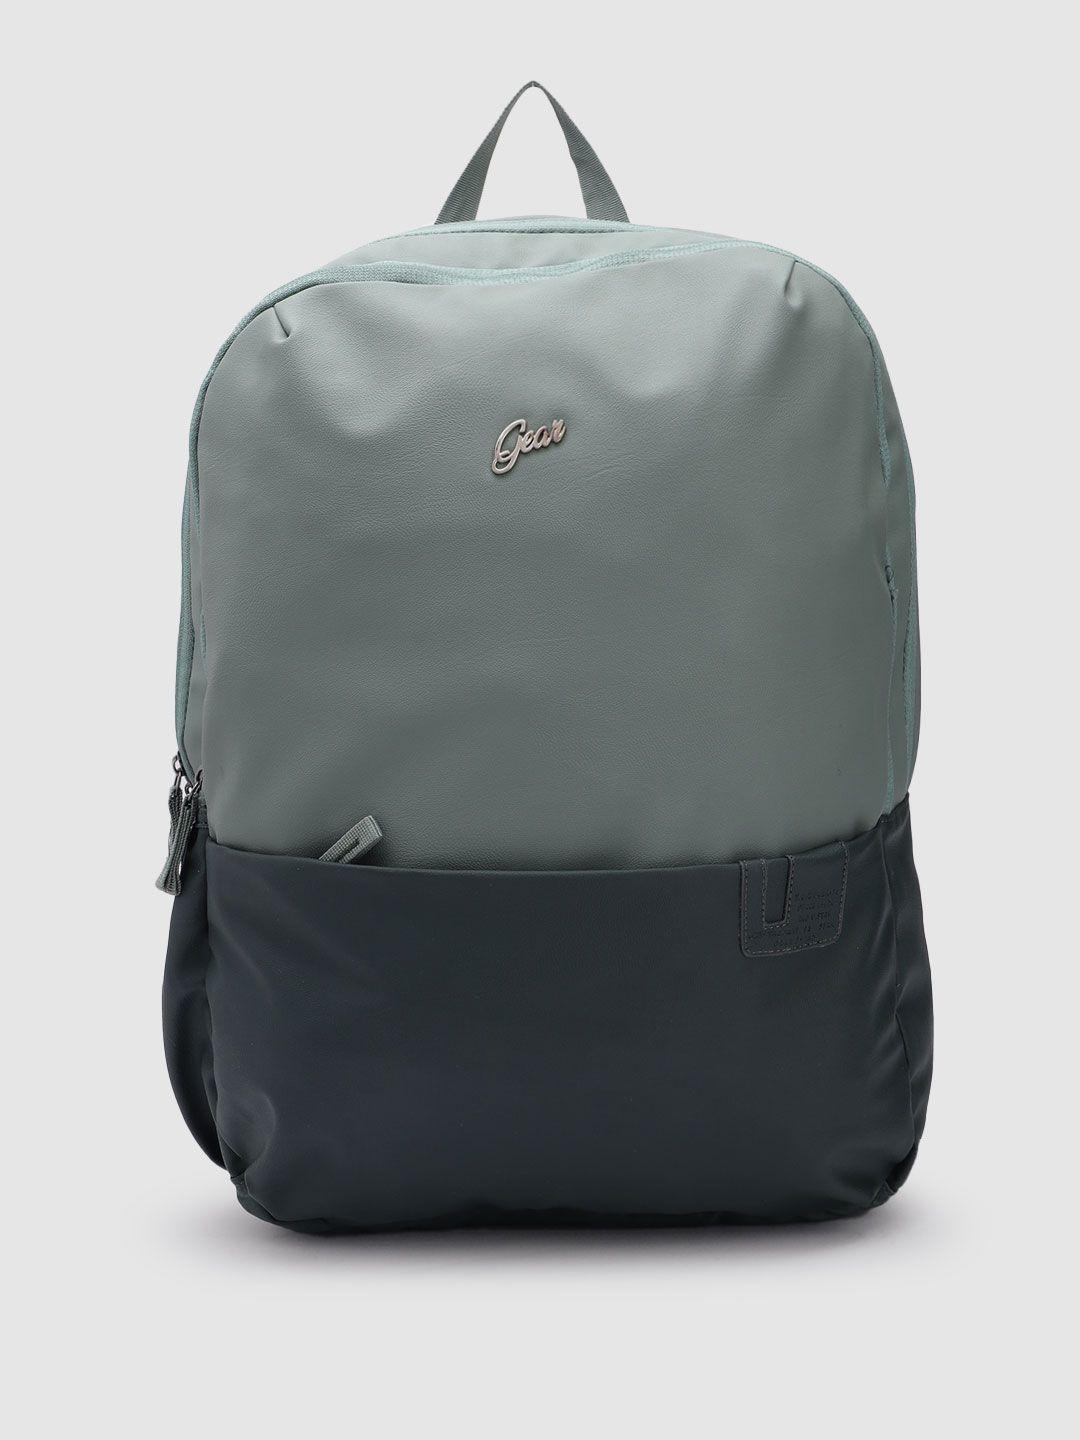 gear unisex colourblocked backpack- 16l